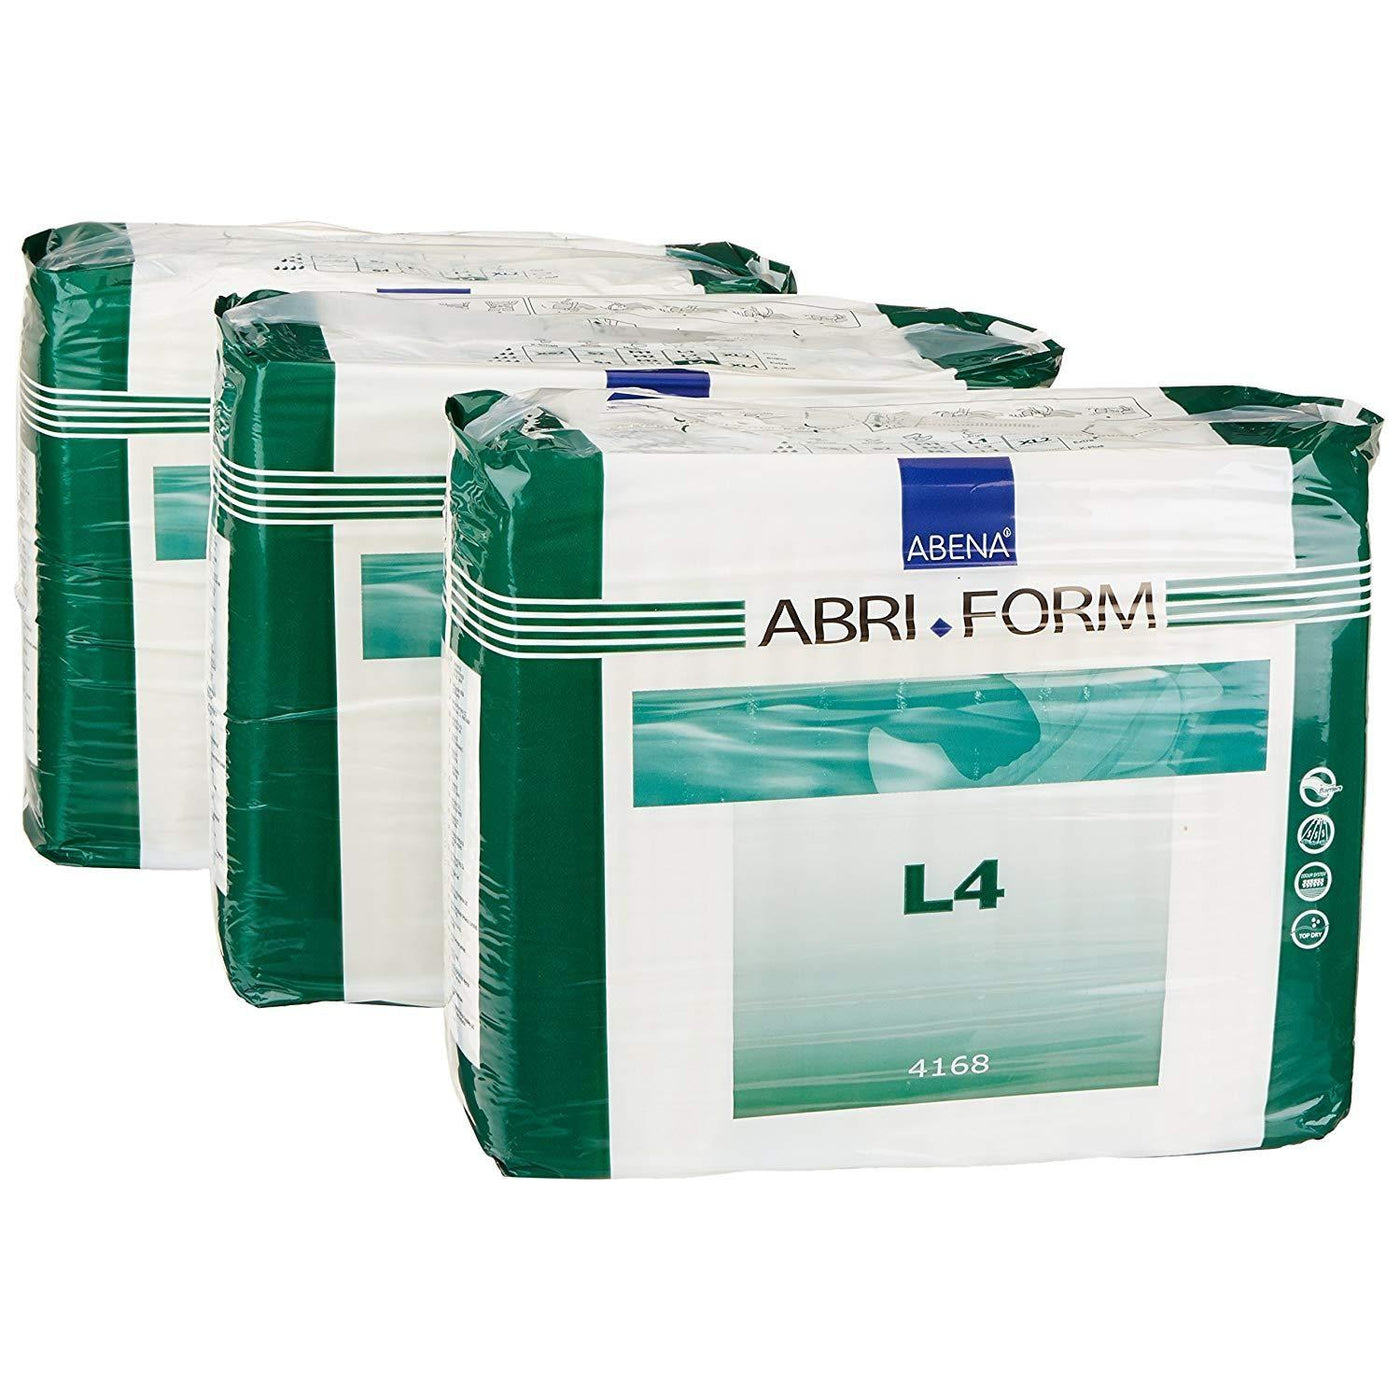 Adult diaper, Abena Abri Form Premium Airplus, 4000ML, Incontinence Aids